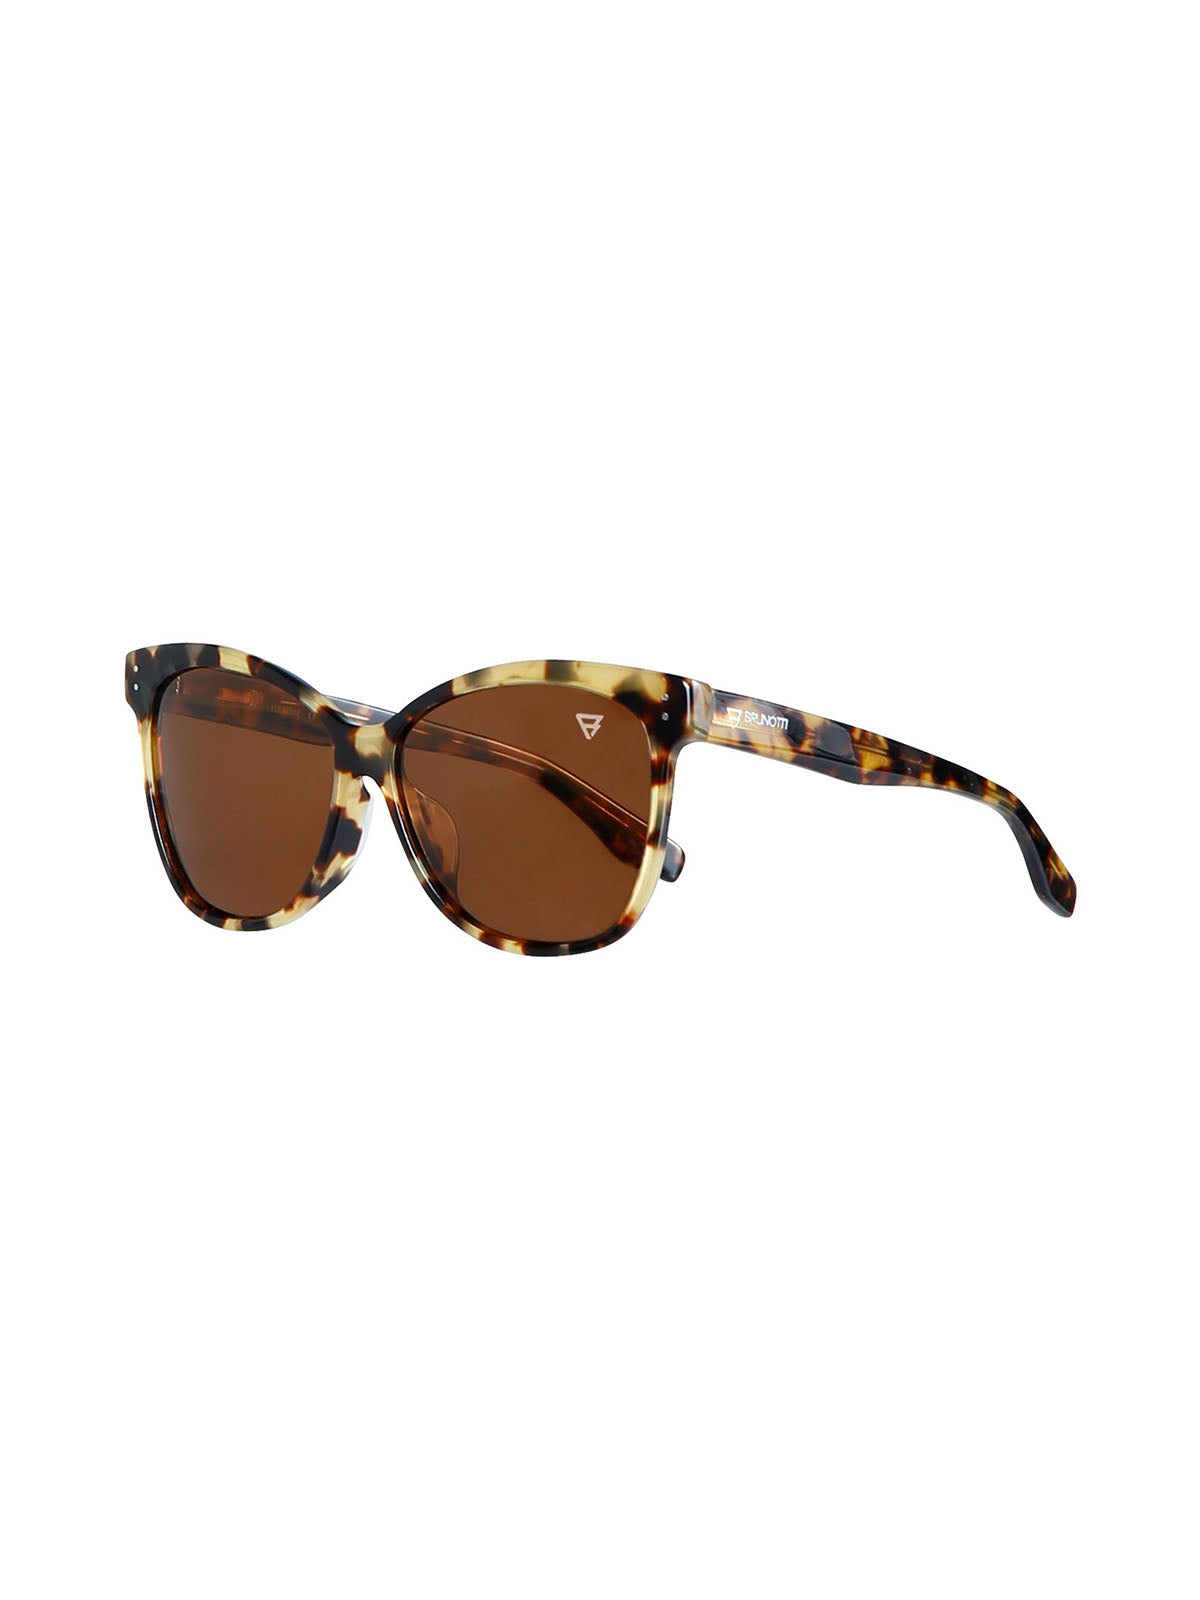 Ebro-1 Women Sunglasses